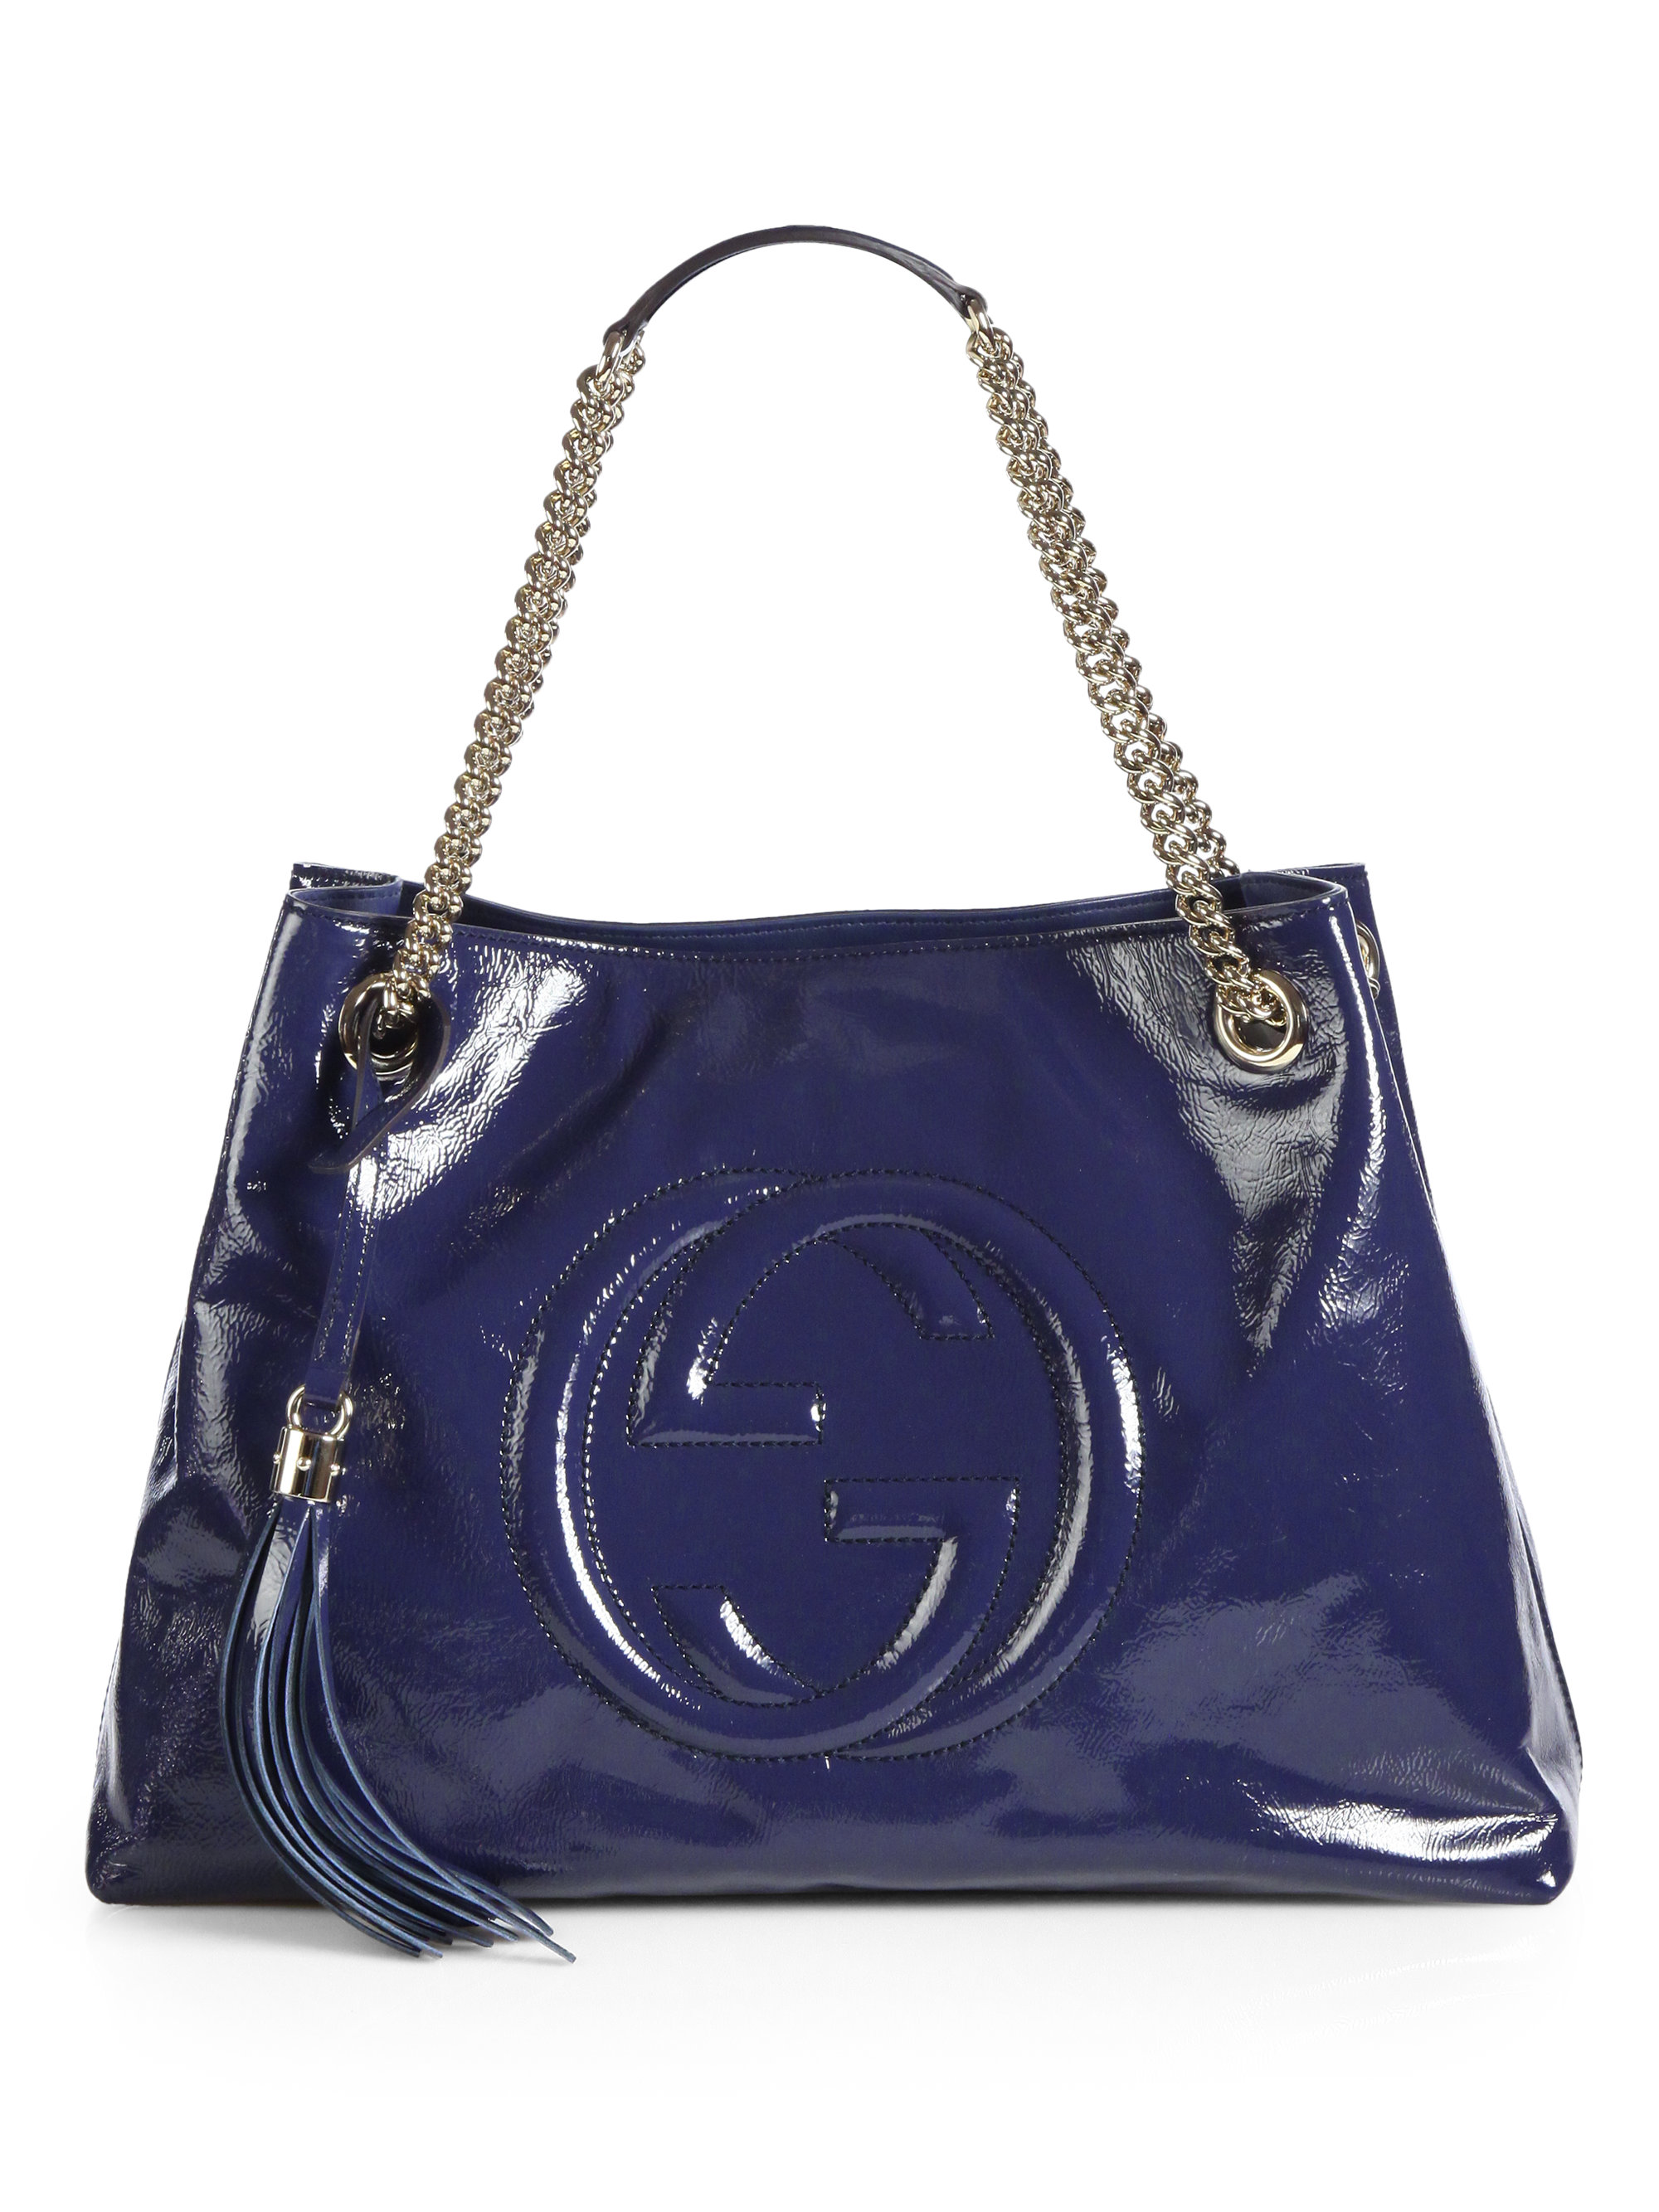 Gucci Soho Patent Leather Shoulder Bag in Blue (AZURE) | Lyst